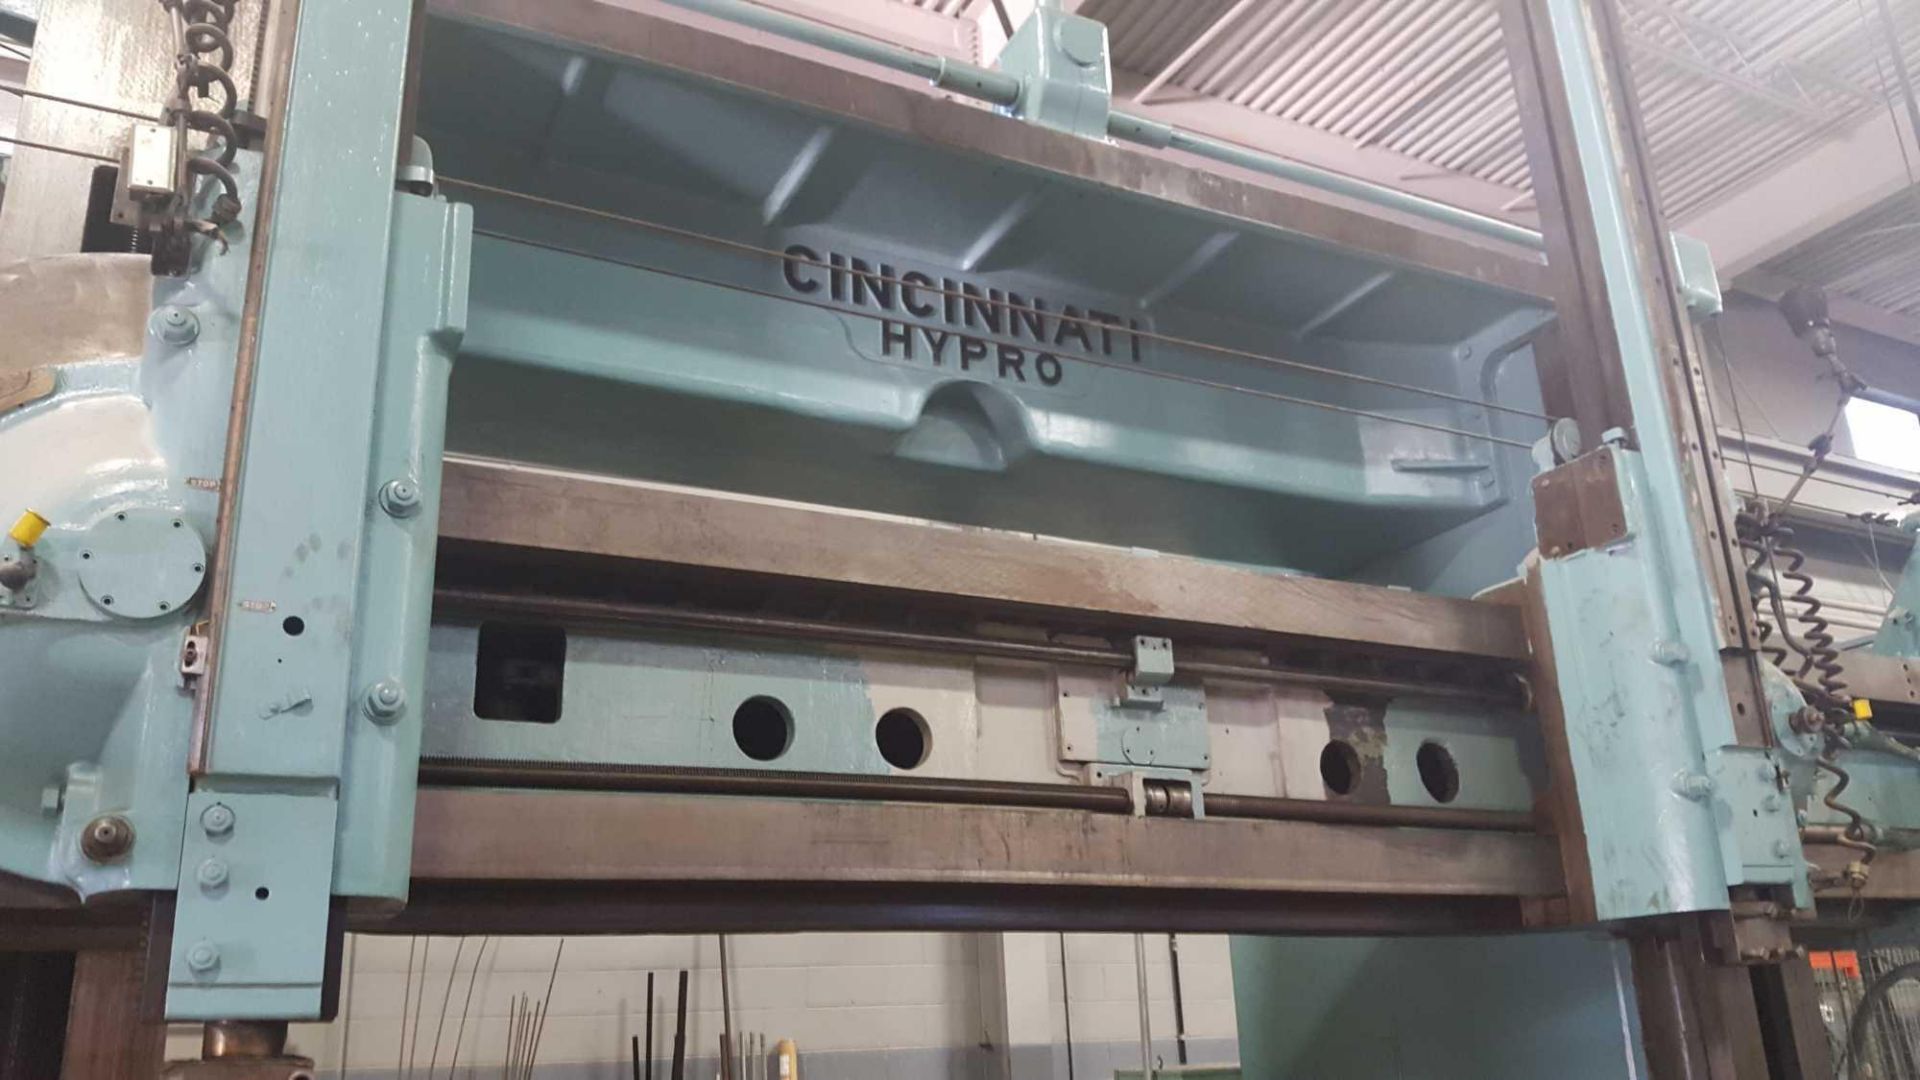 Cincinnati Hypro Vertical Boring mill, 144" diameter table, 150" swing, 150 hp, dimensions: 25' wide - Image 9 of 9